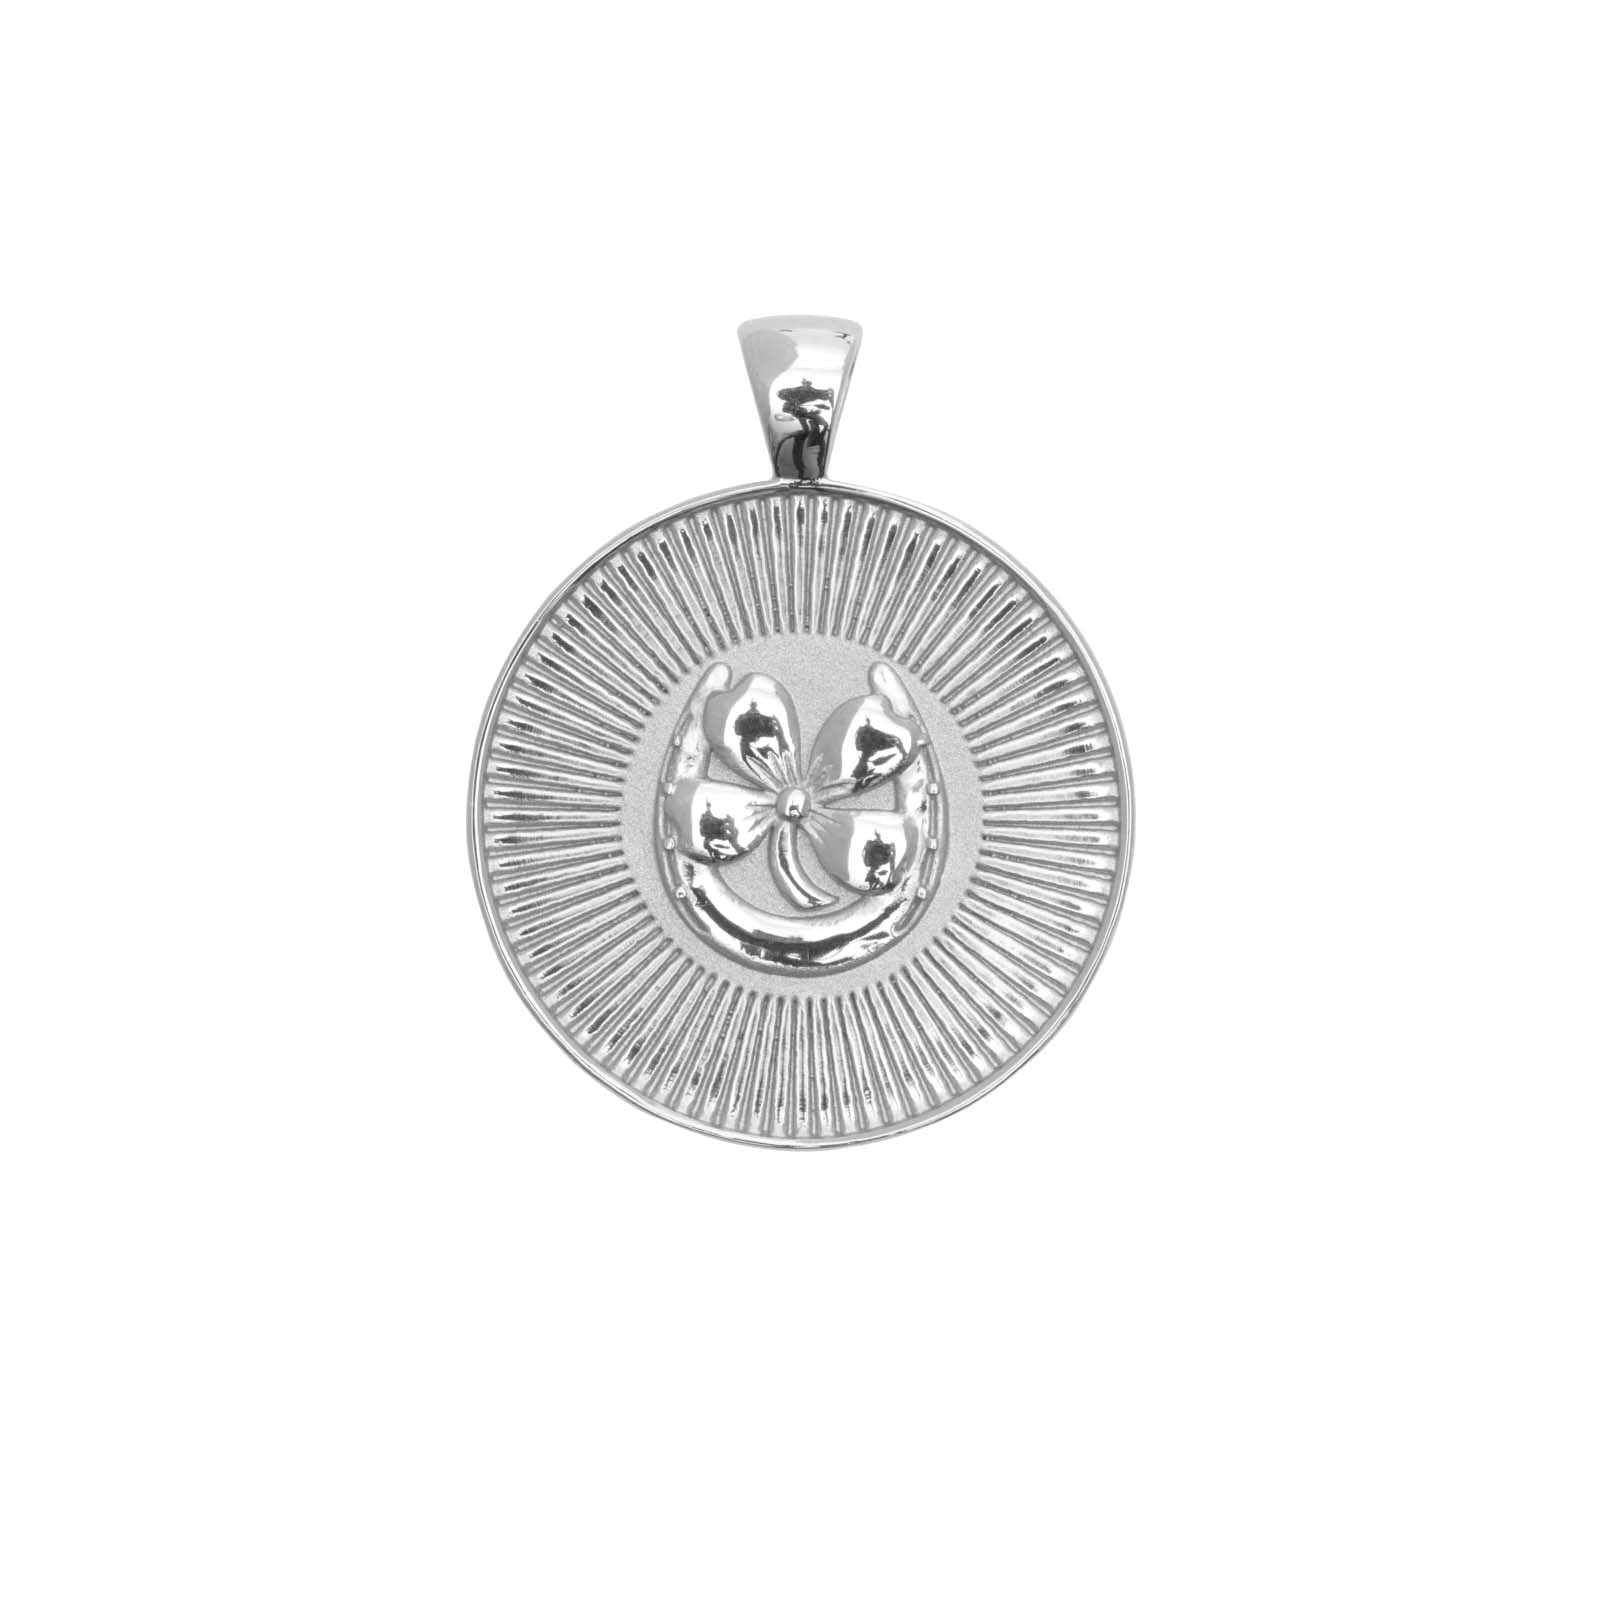 LUCKY JW Original Pendant Coin in Silver